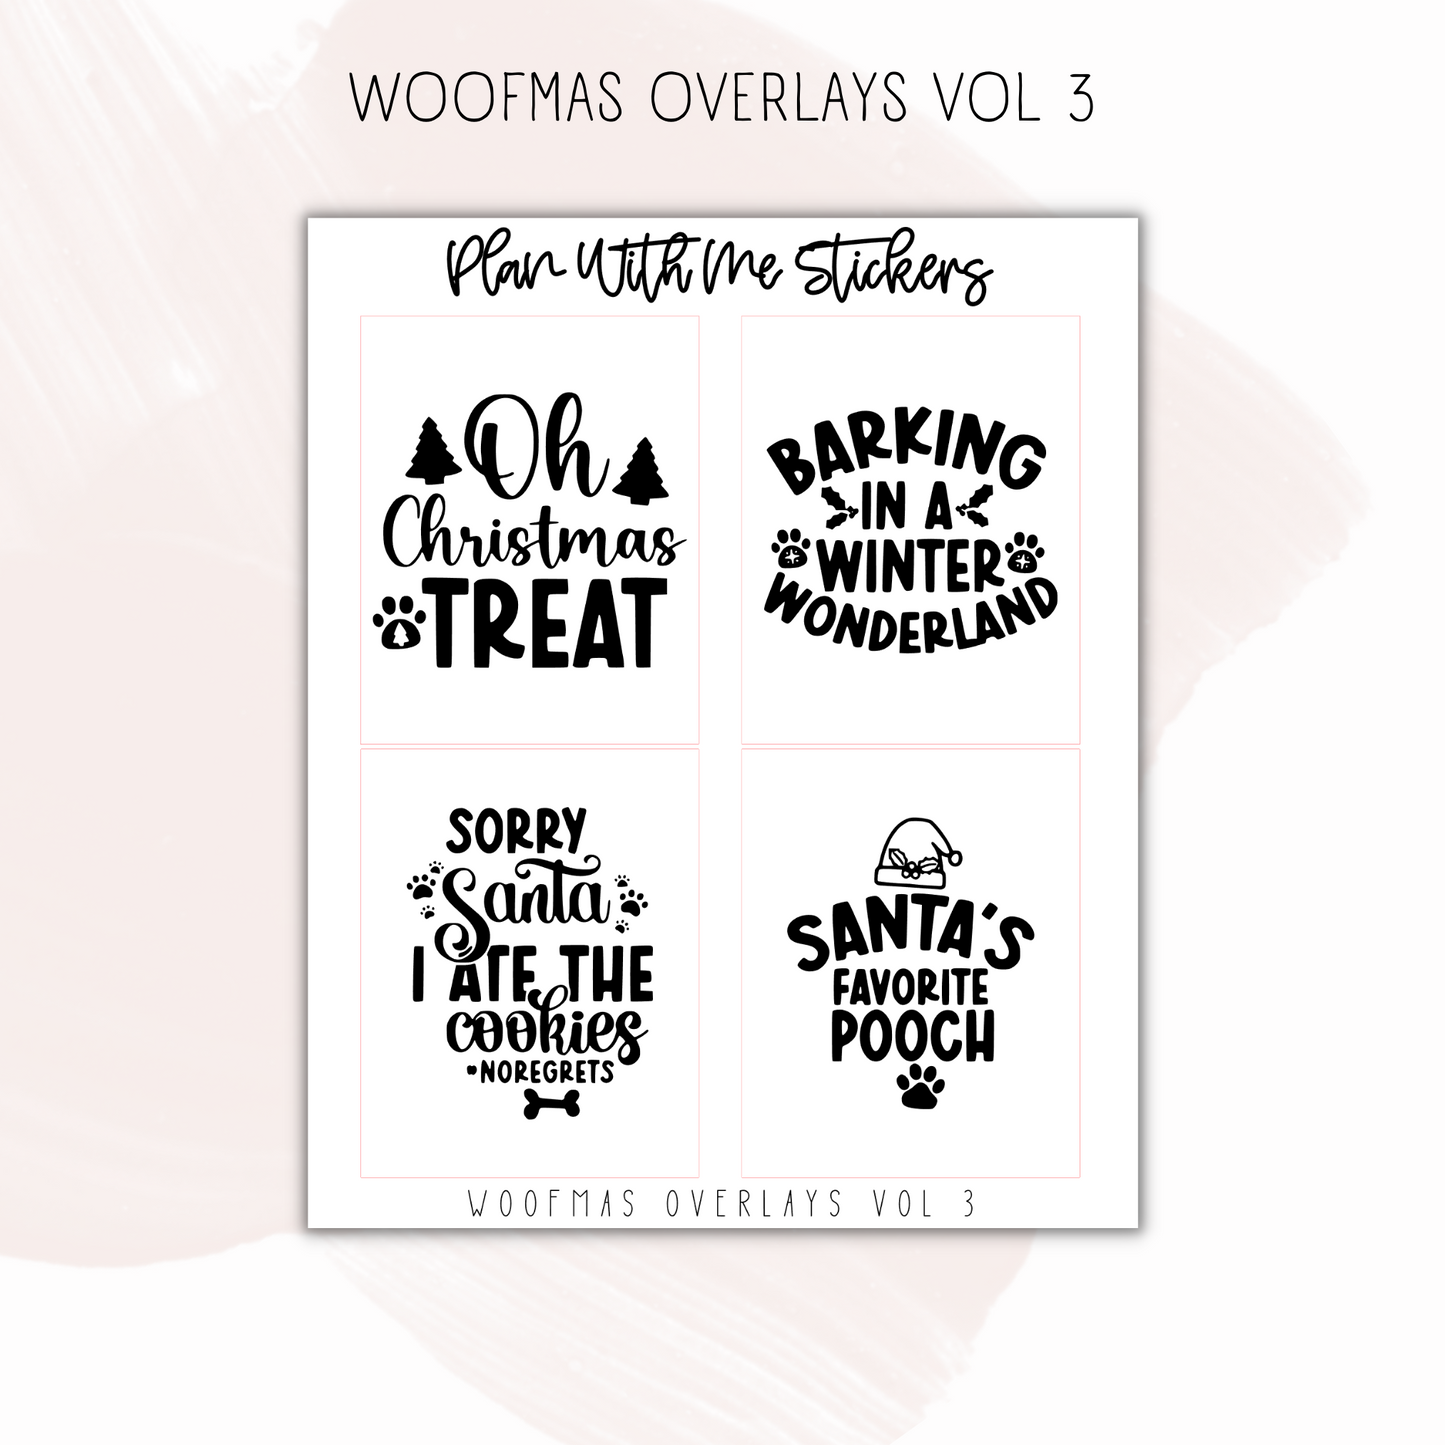 Woofmas Overlays Vol 3